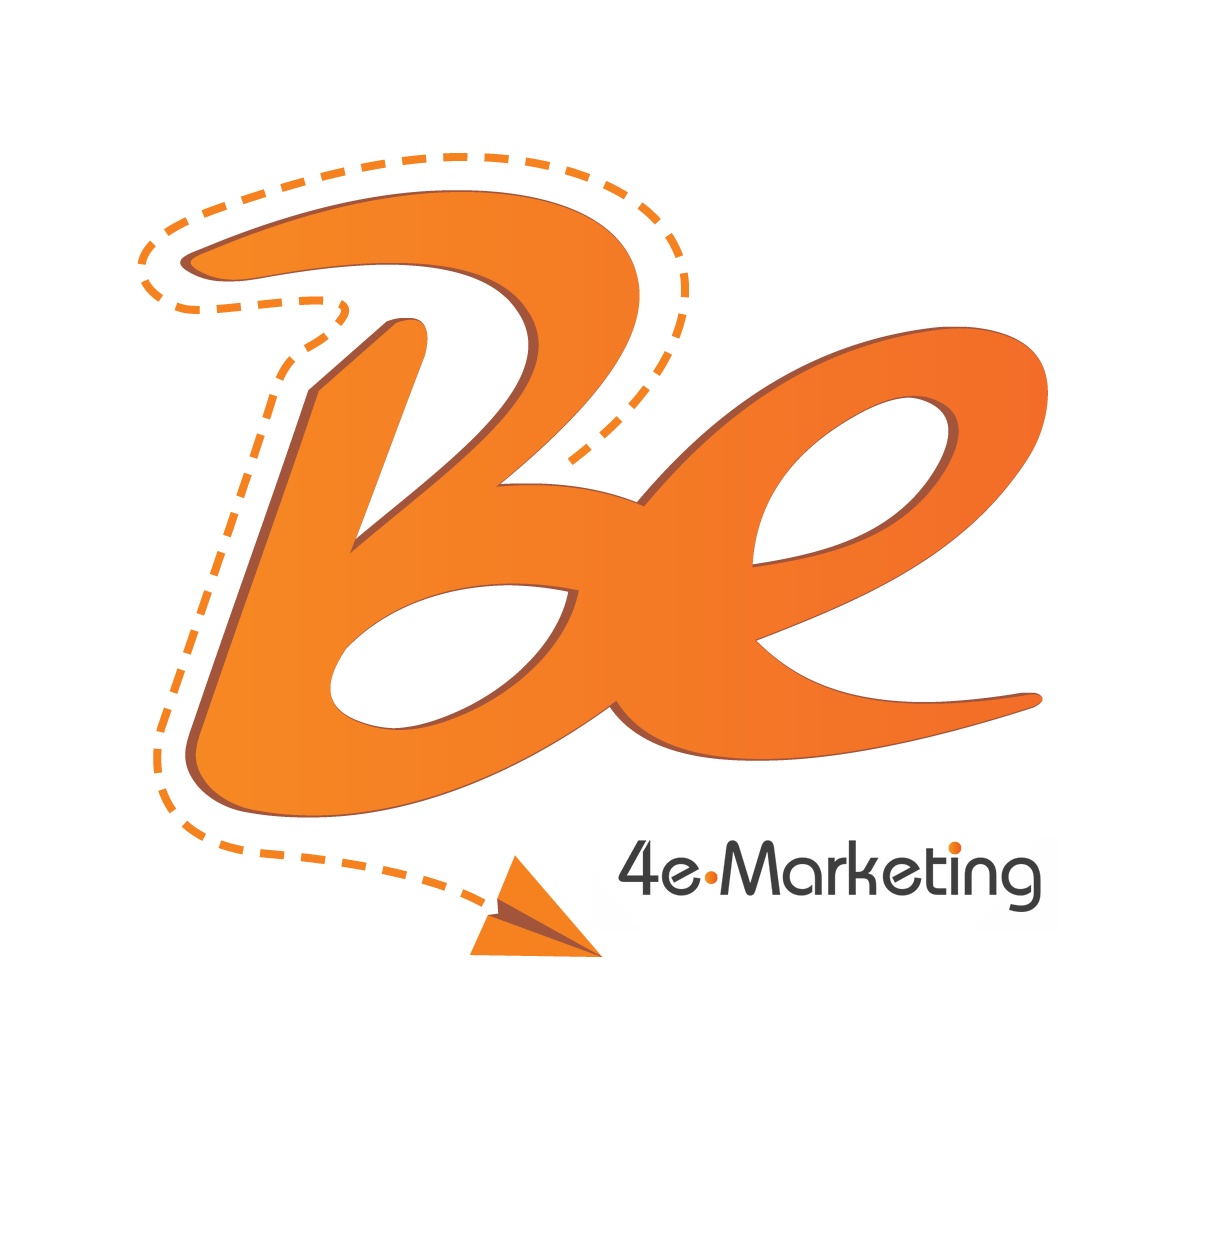 be4e Marketing